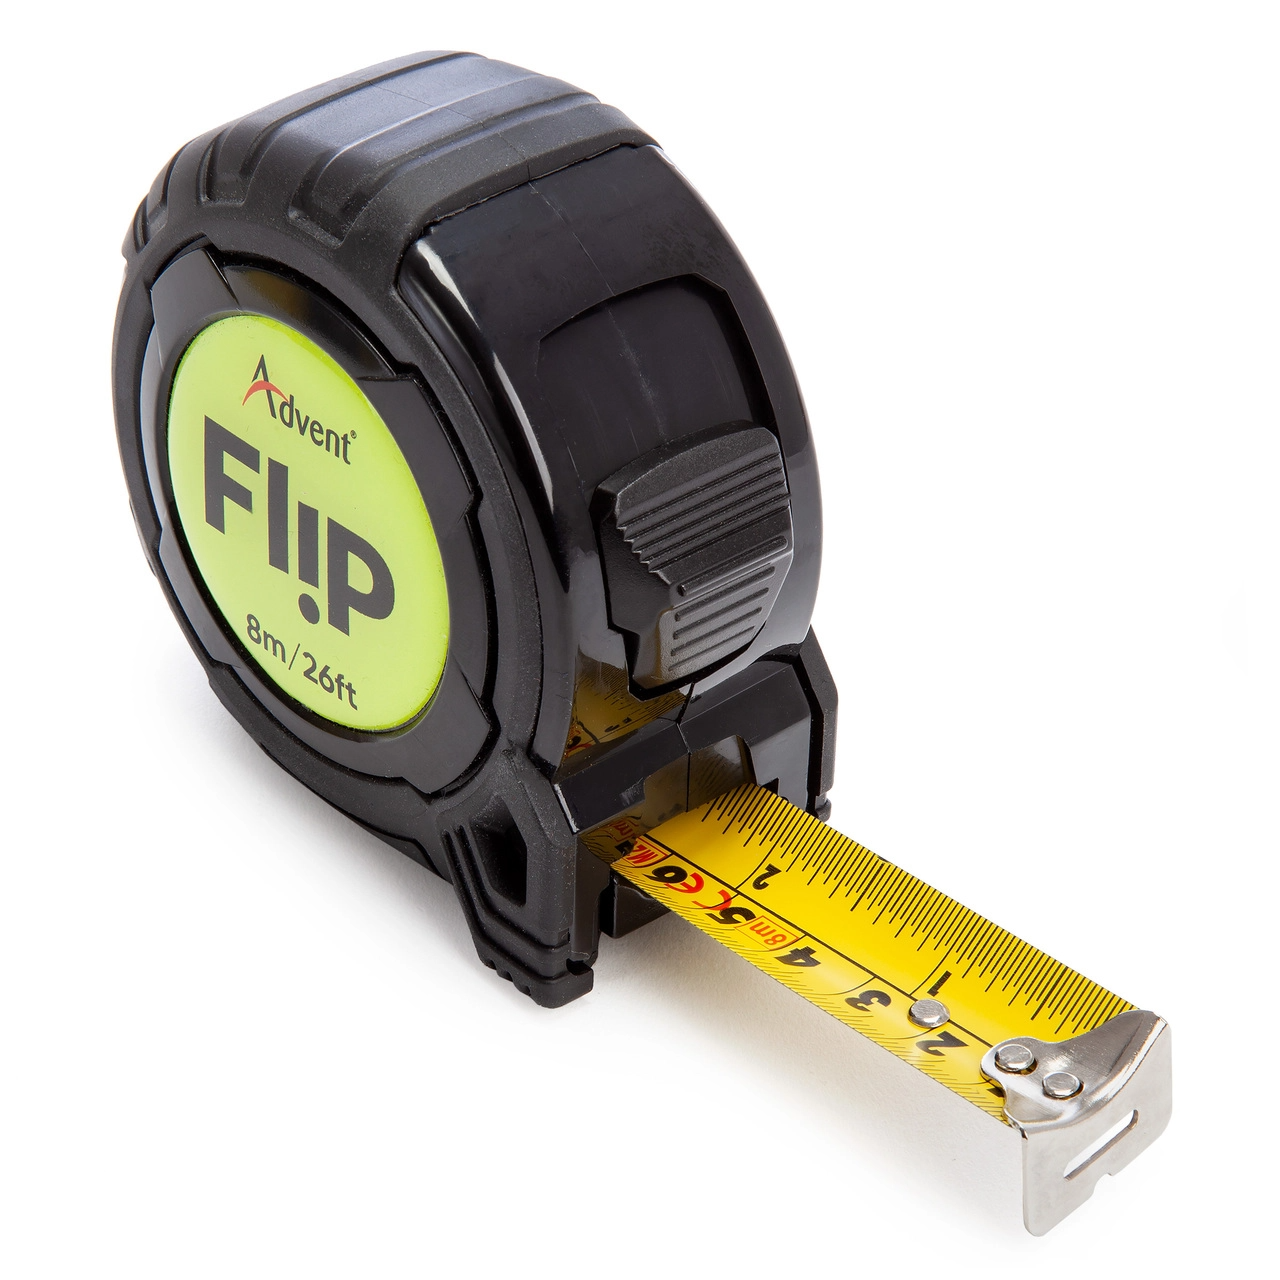 Flip Professional Tape Measure Metric/Imperial 8m/26ft